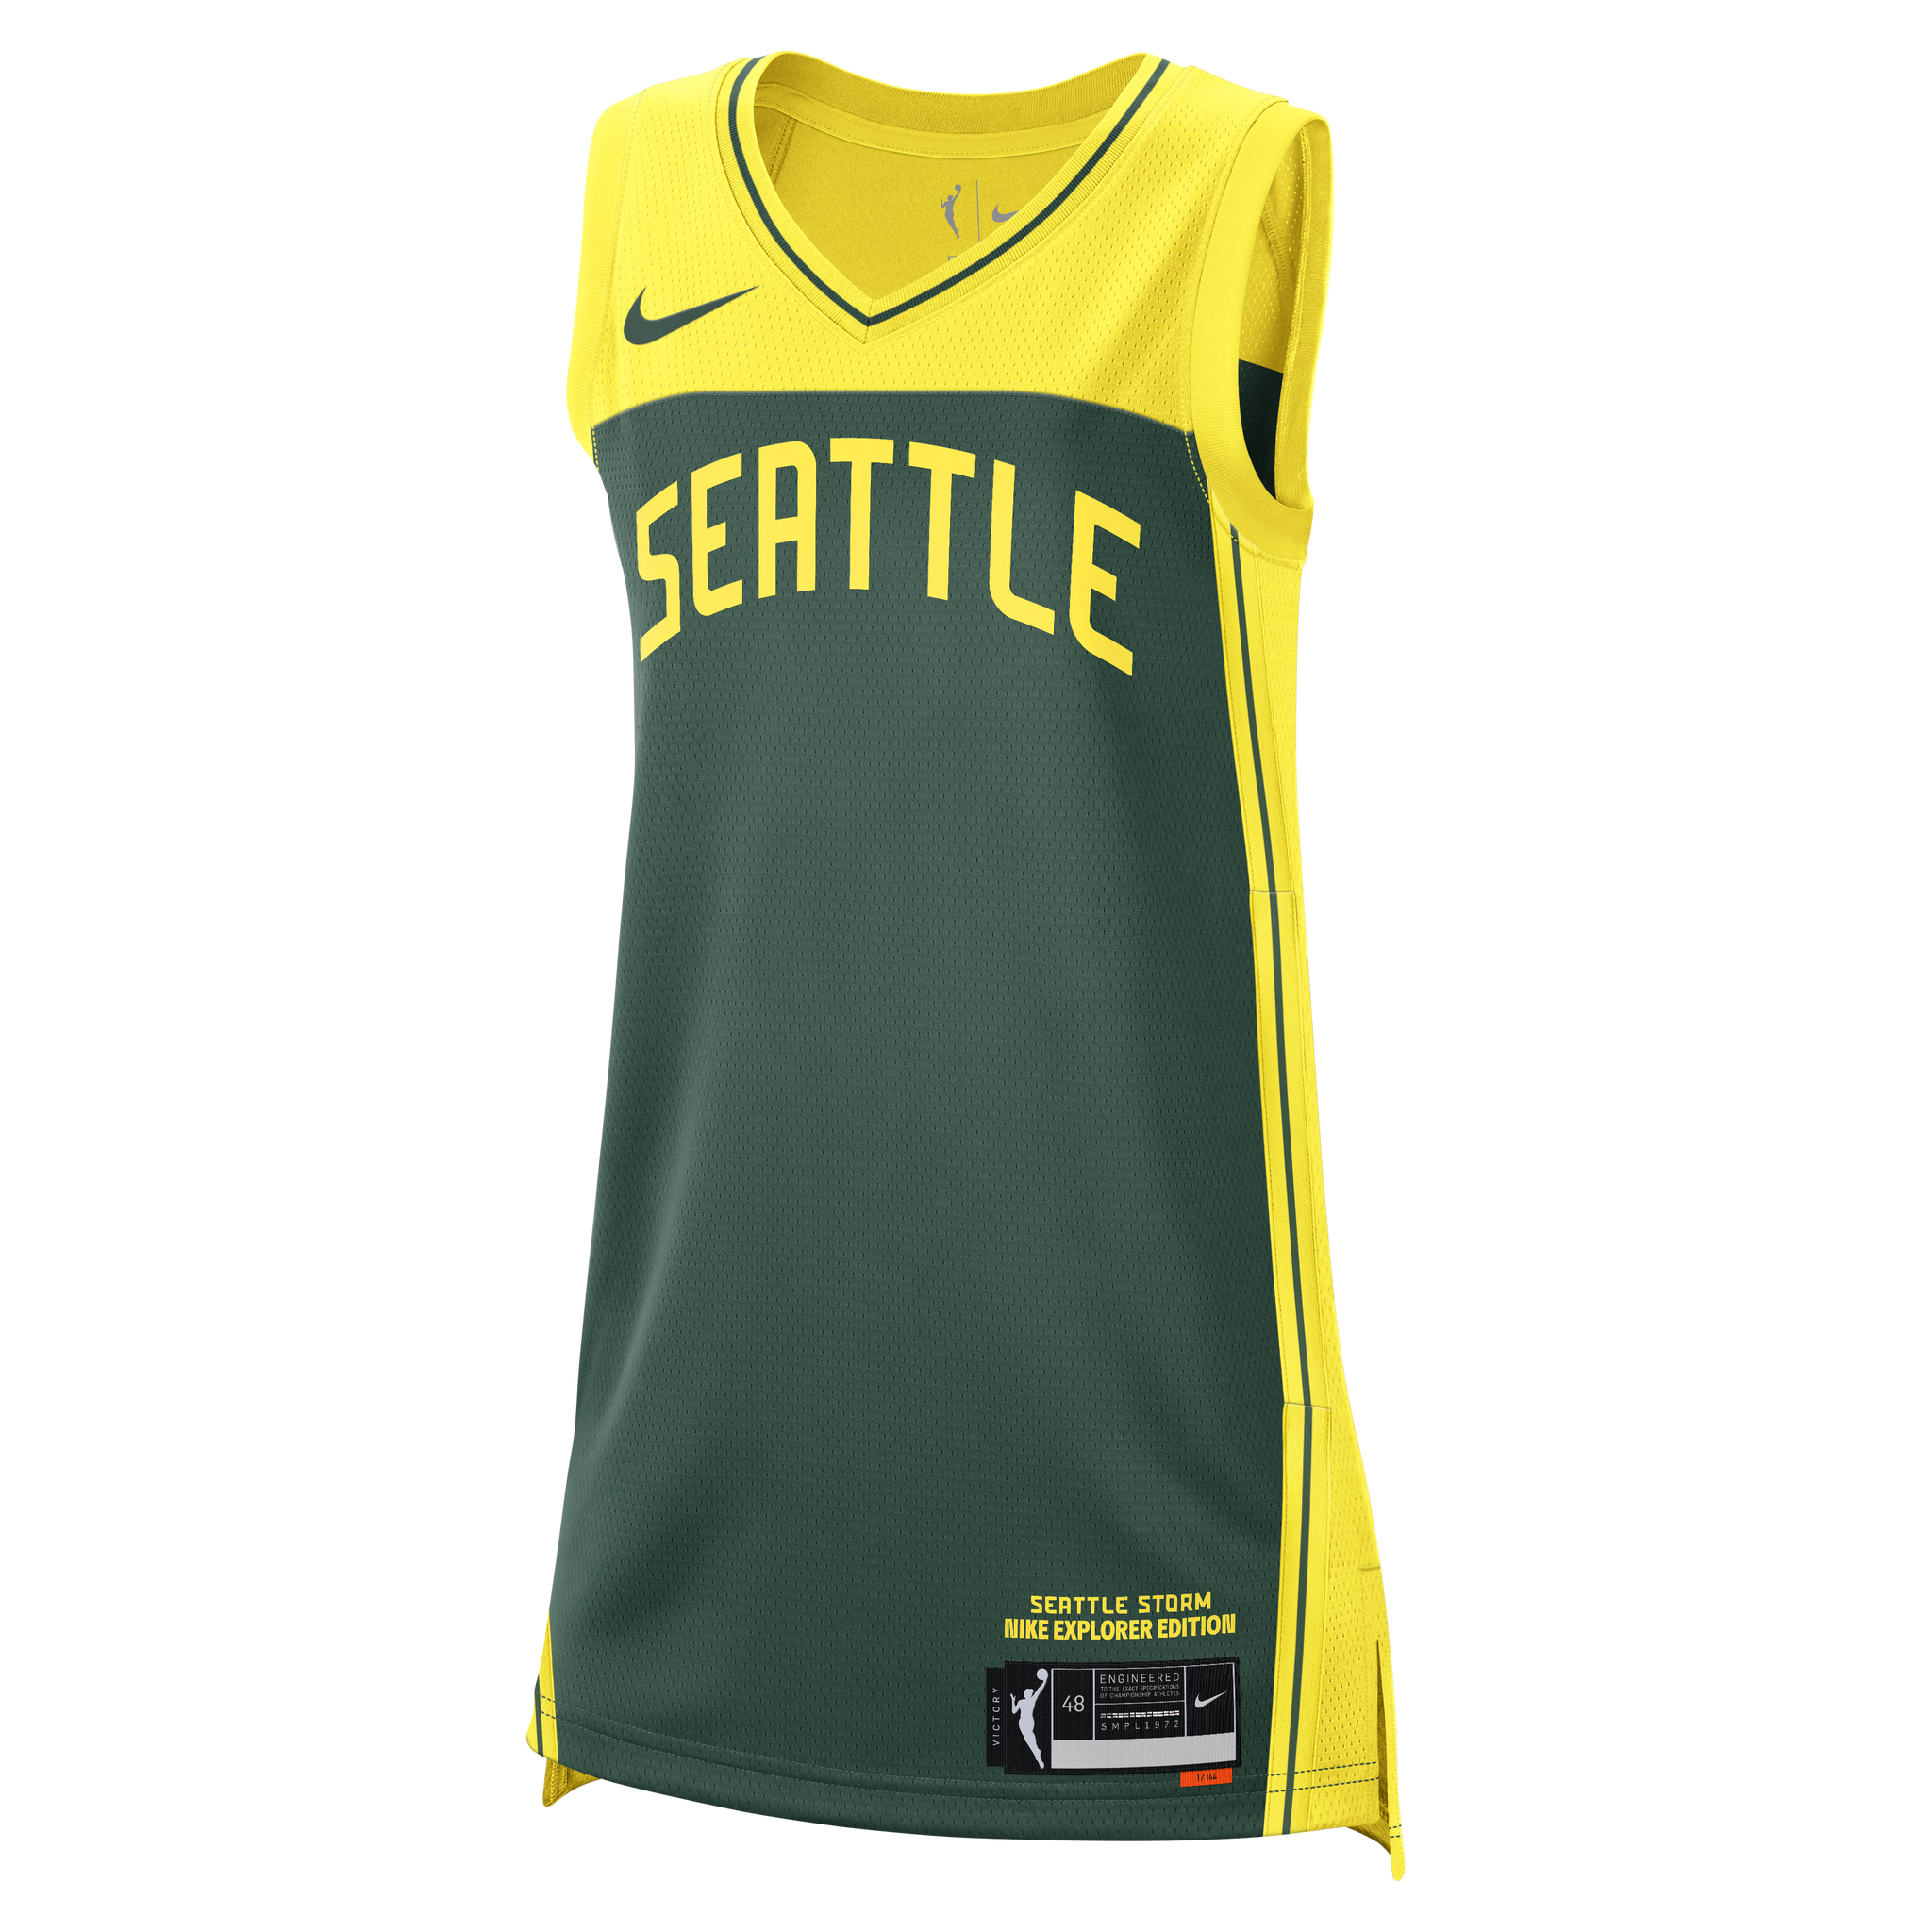 Nike Youth Seattle Storm Sue Bird Replica Rebel Jersey - Black - L - L (Large)